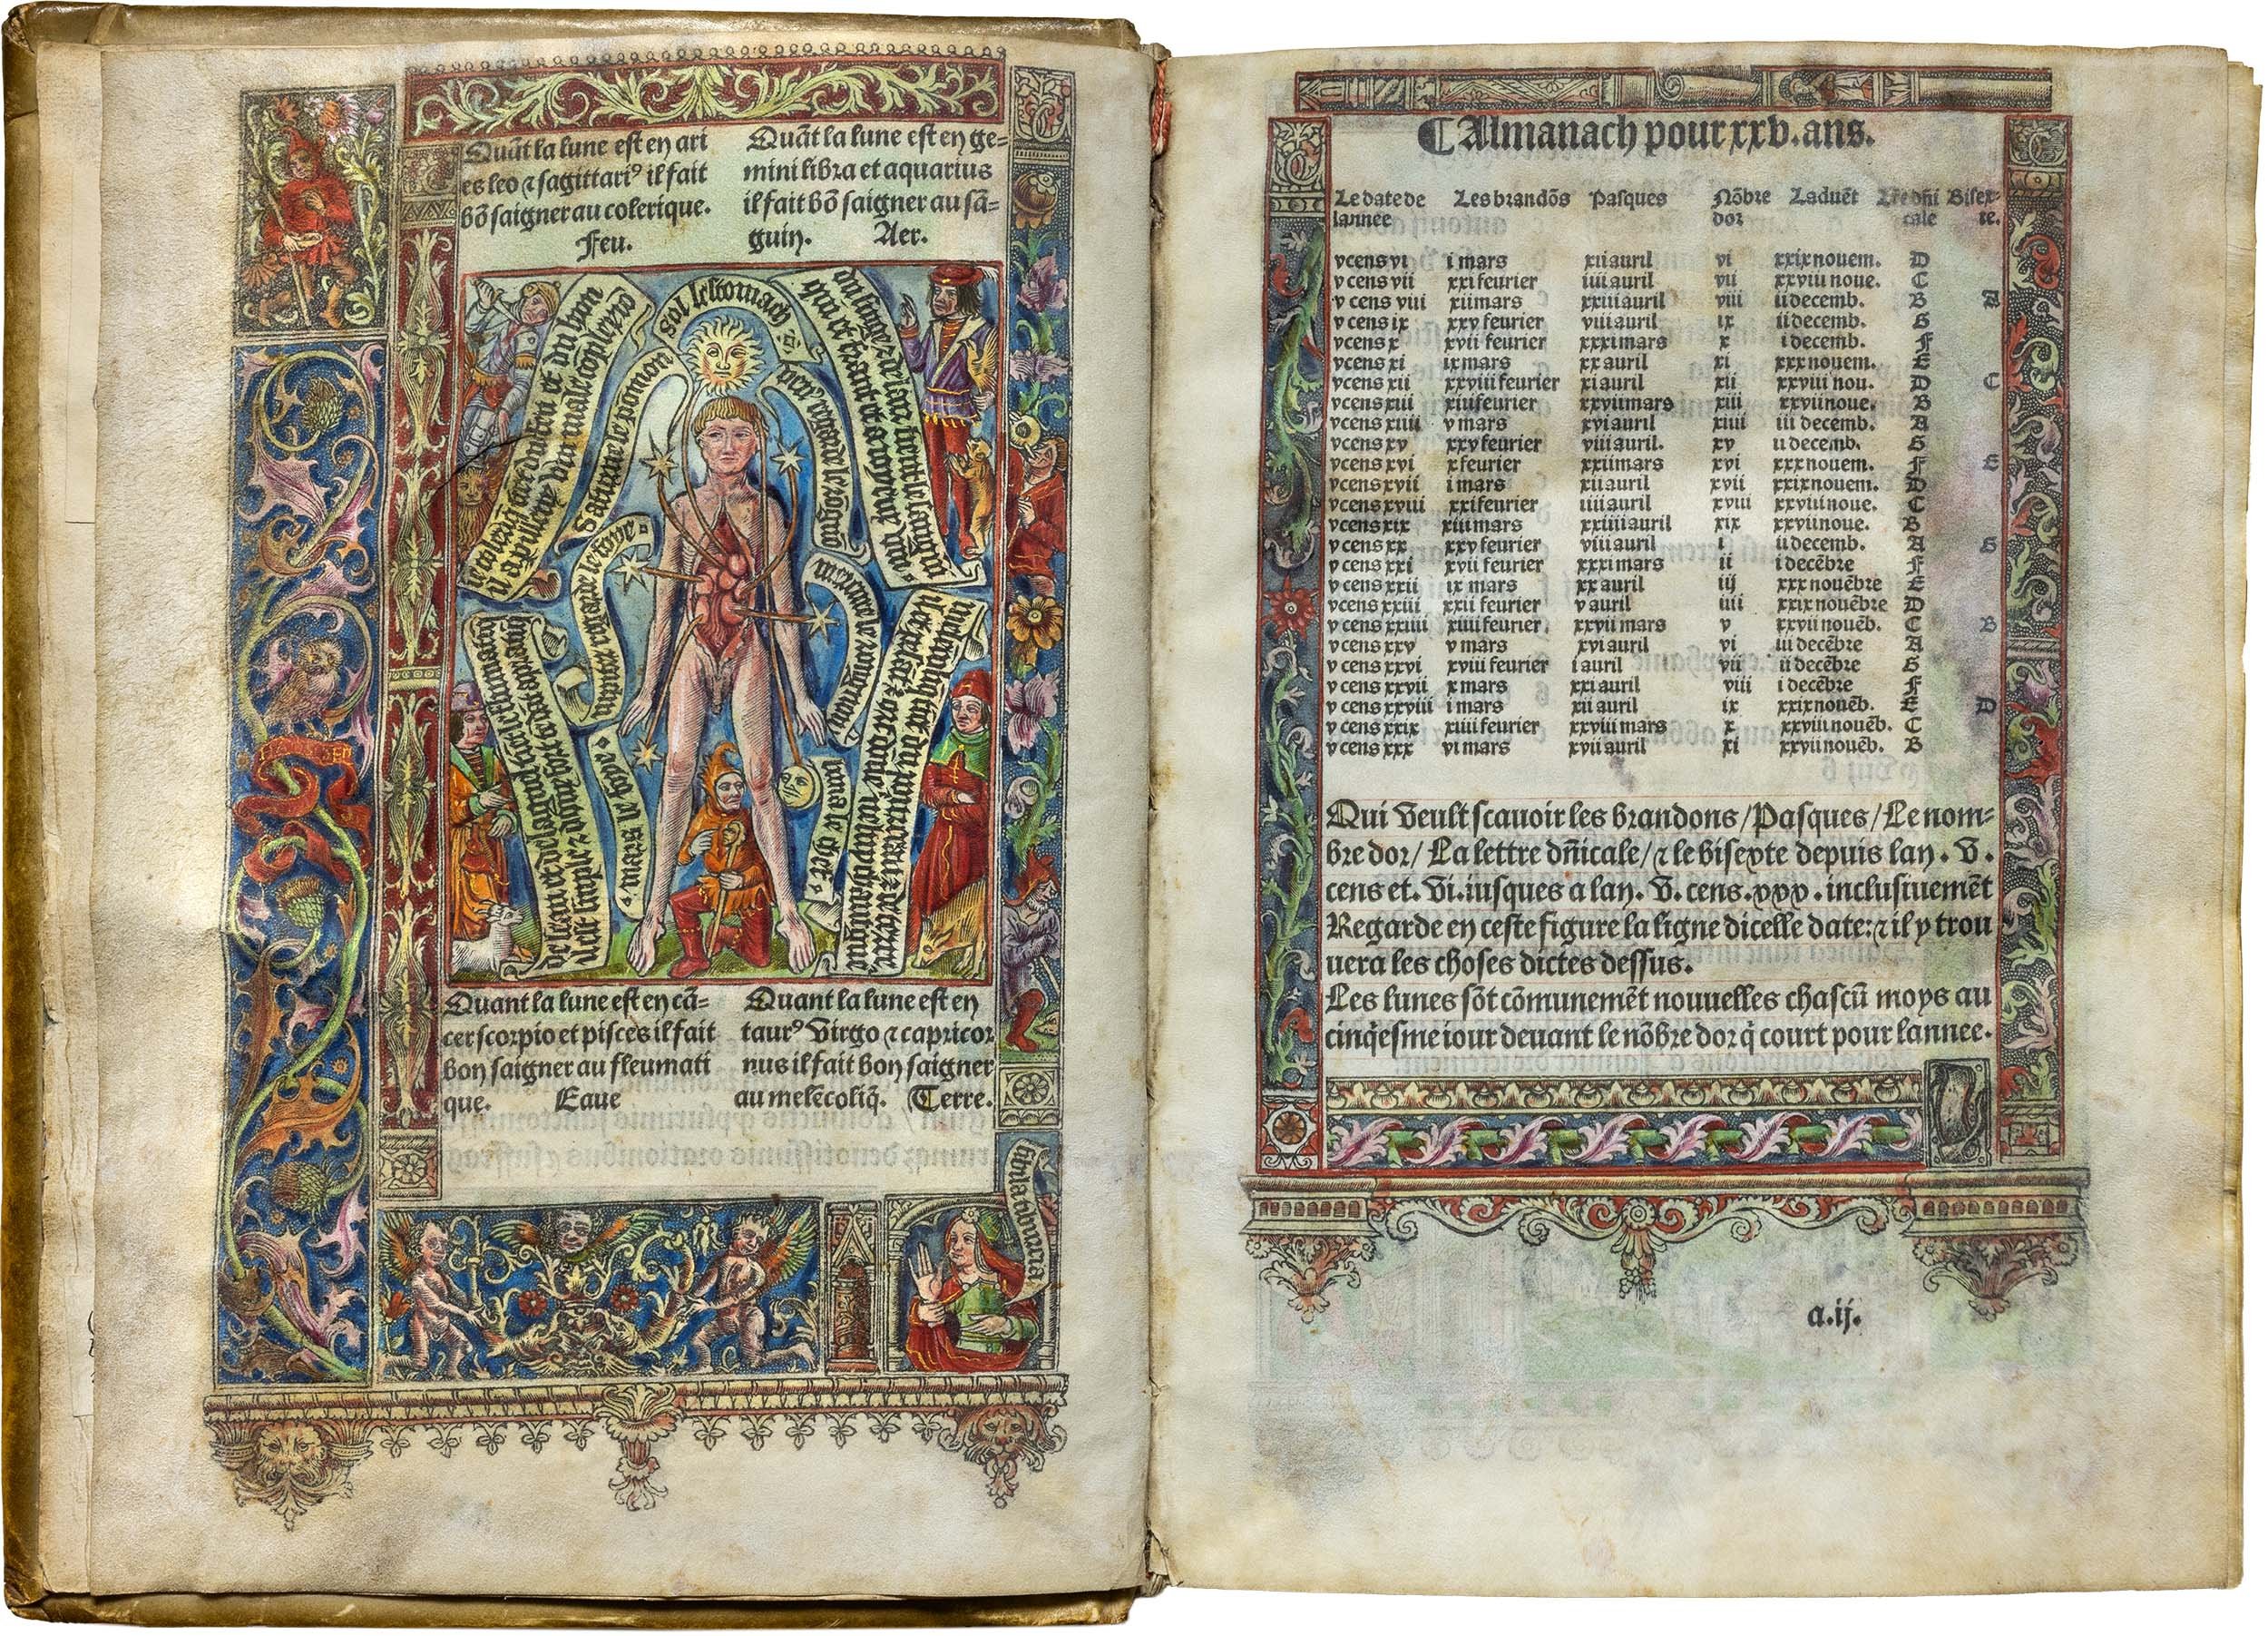 Horae-bmv-31-march-1511-kerver-printed-book-of-hours-illuminated-copy-vellum-05.jpg